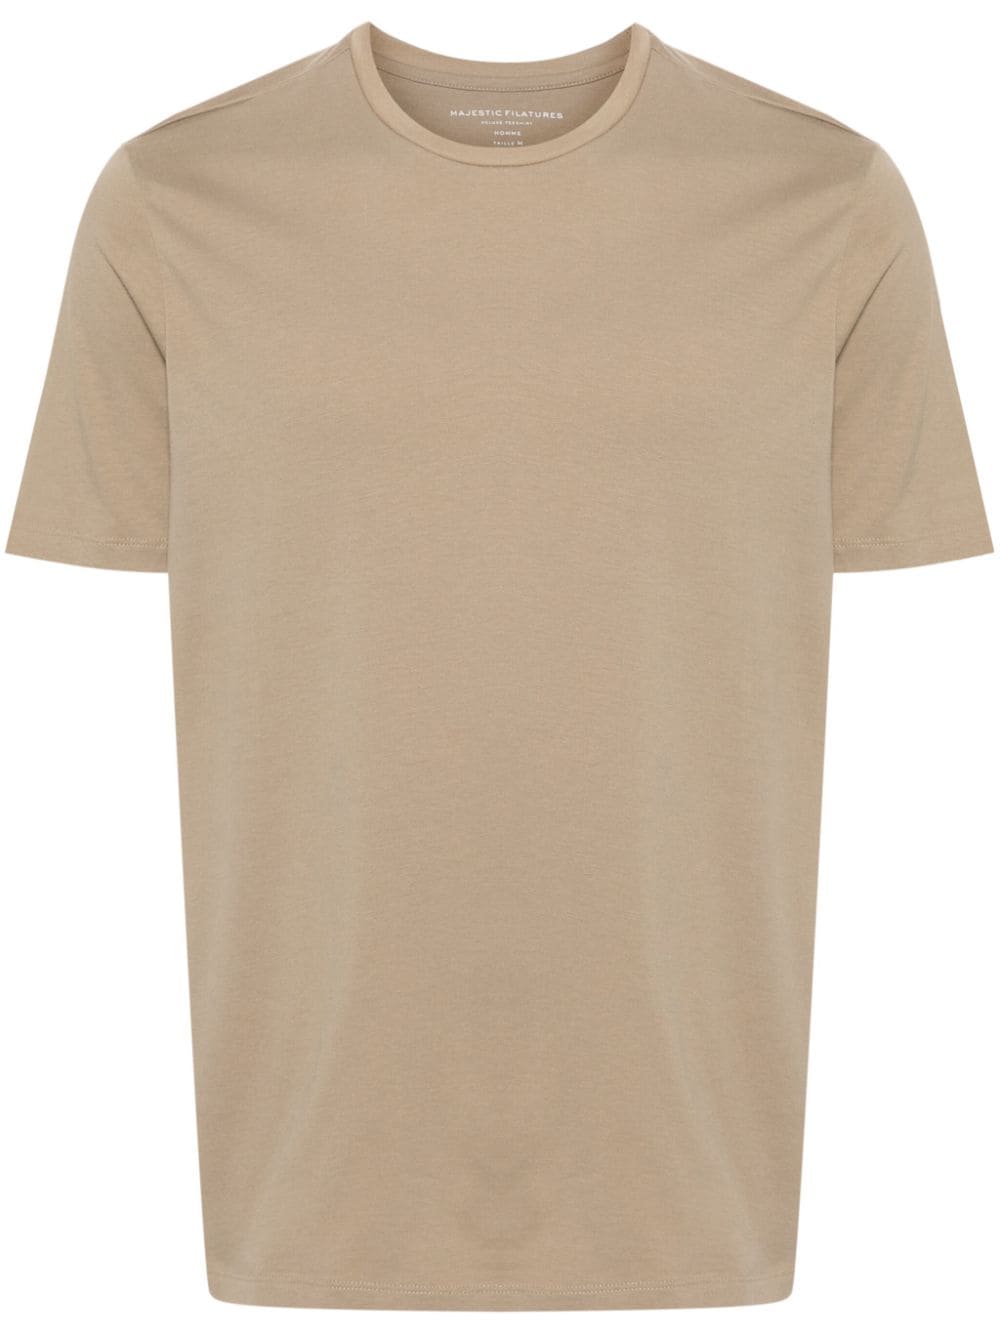 Majestic Filatures short-sleeve cotton T-shirt - Brown von Majestic Filatures